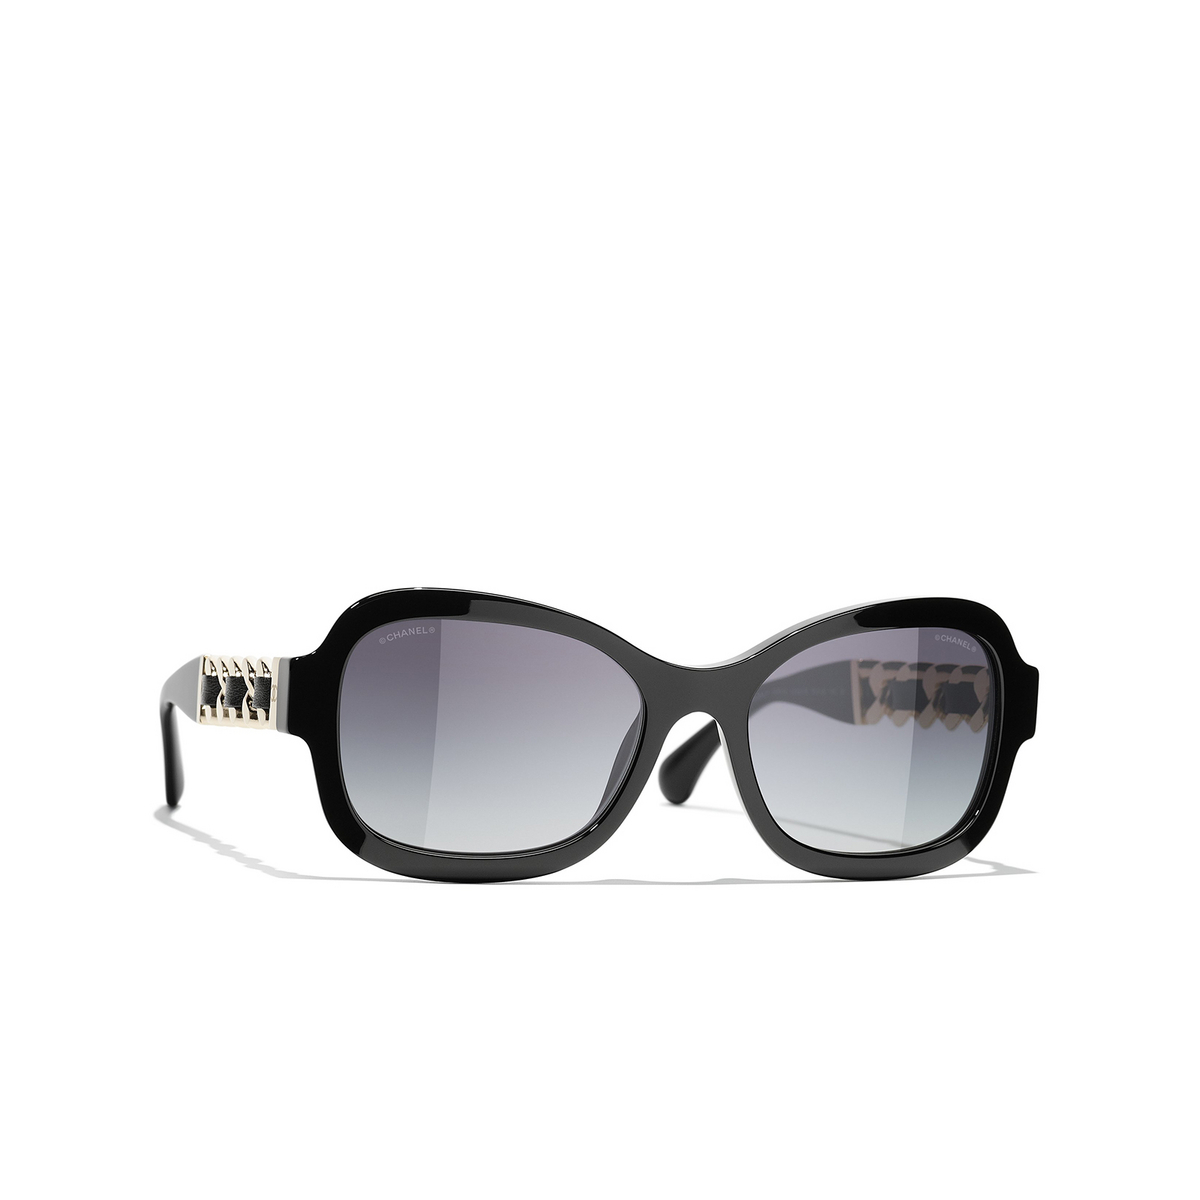 CHANEL rectangle Sunglasses C622S6 Black